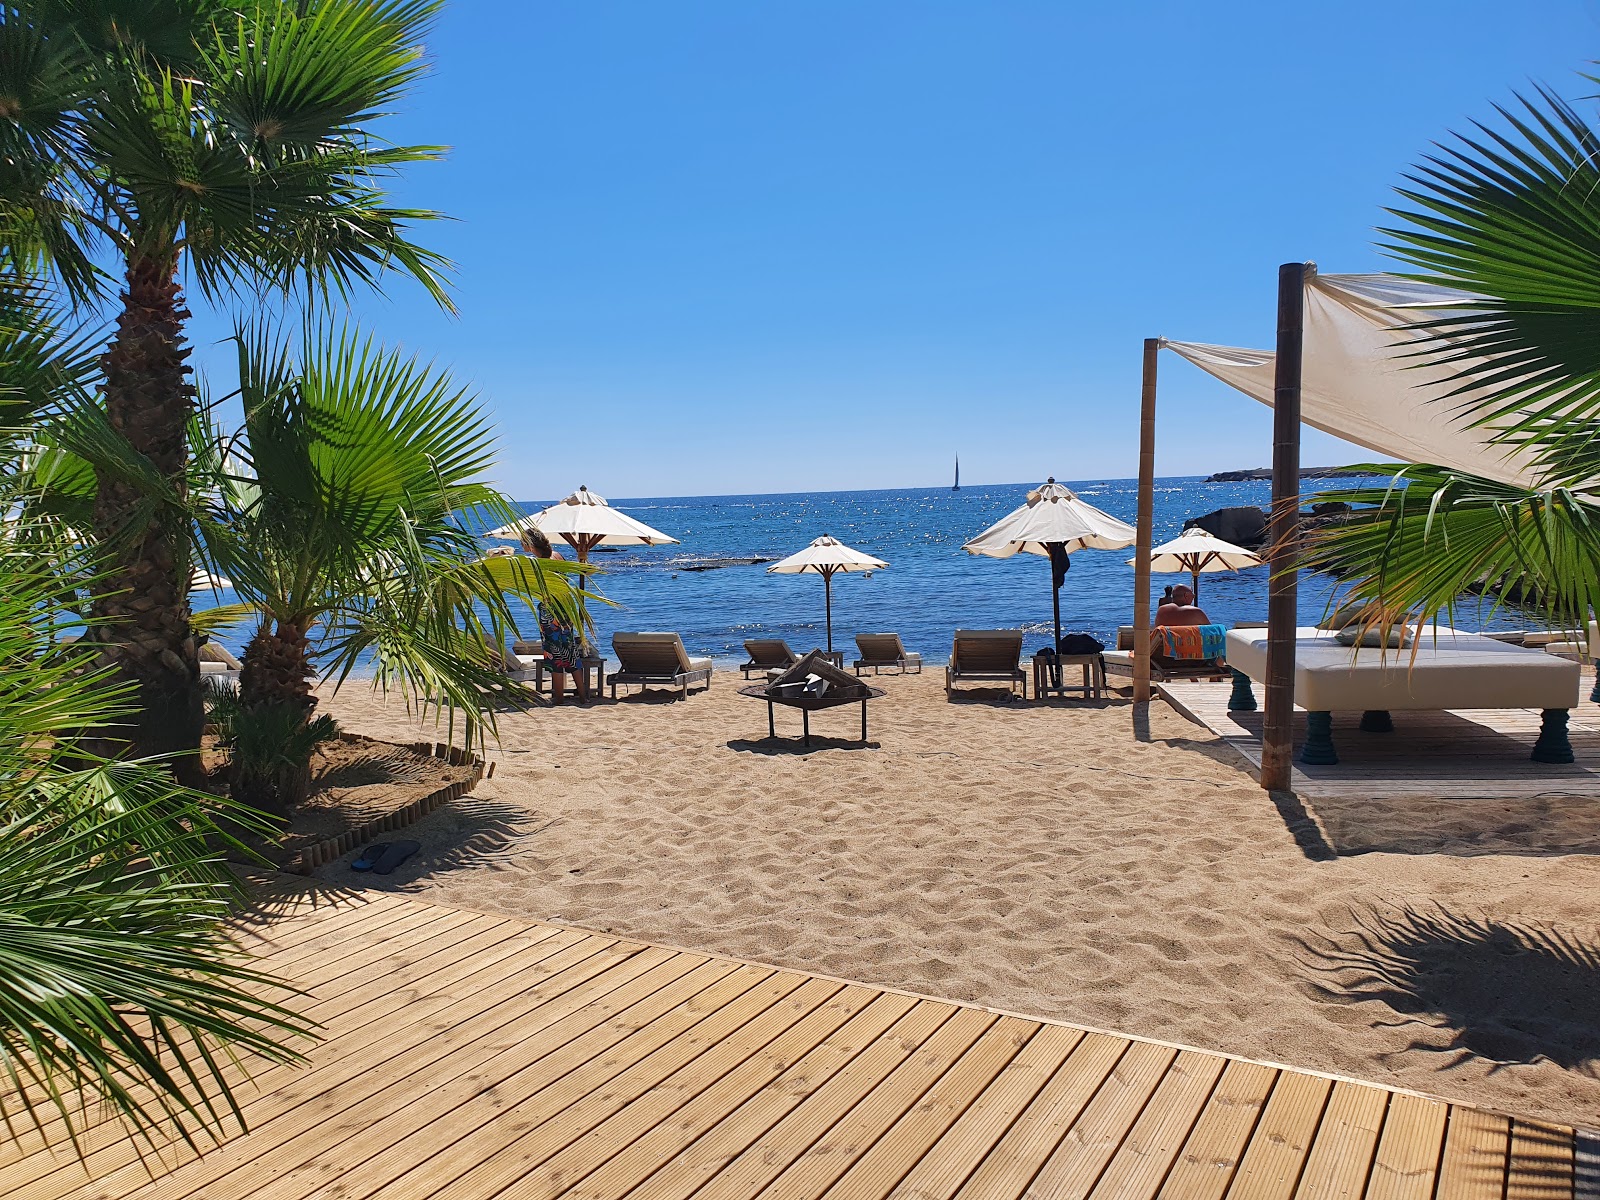 Musciara Resort beach'in fotoğrafı otel alanı